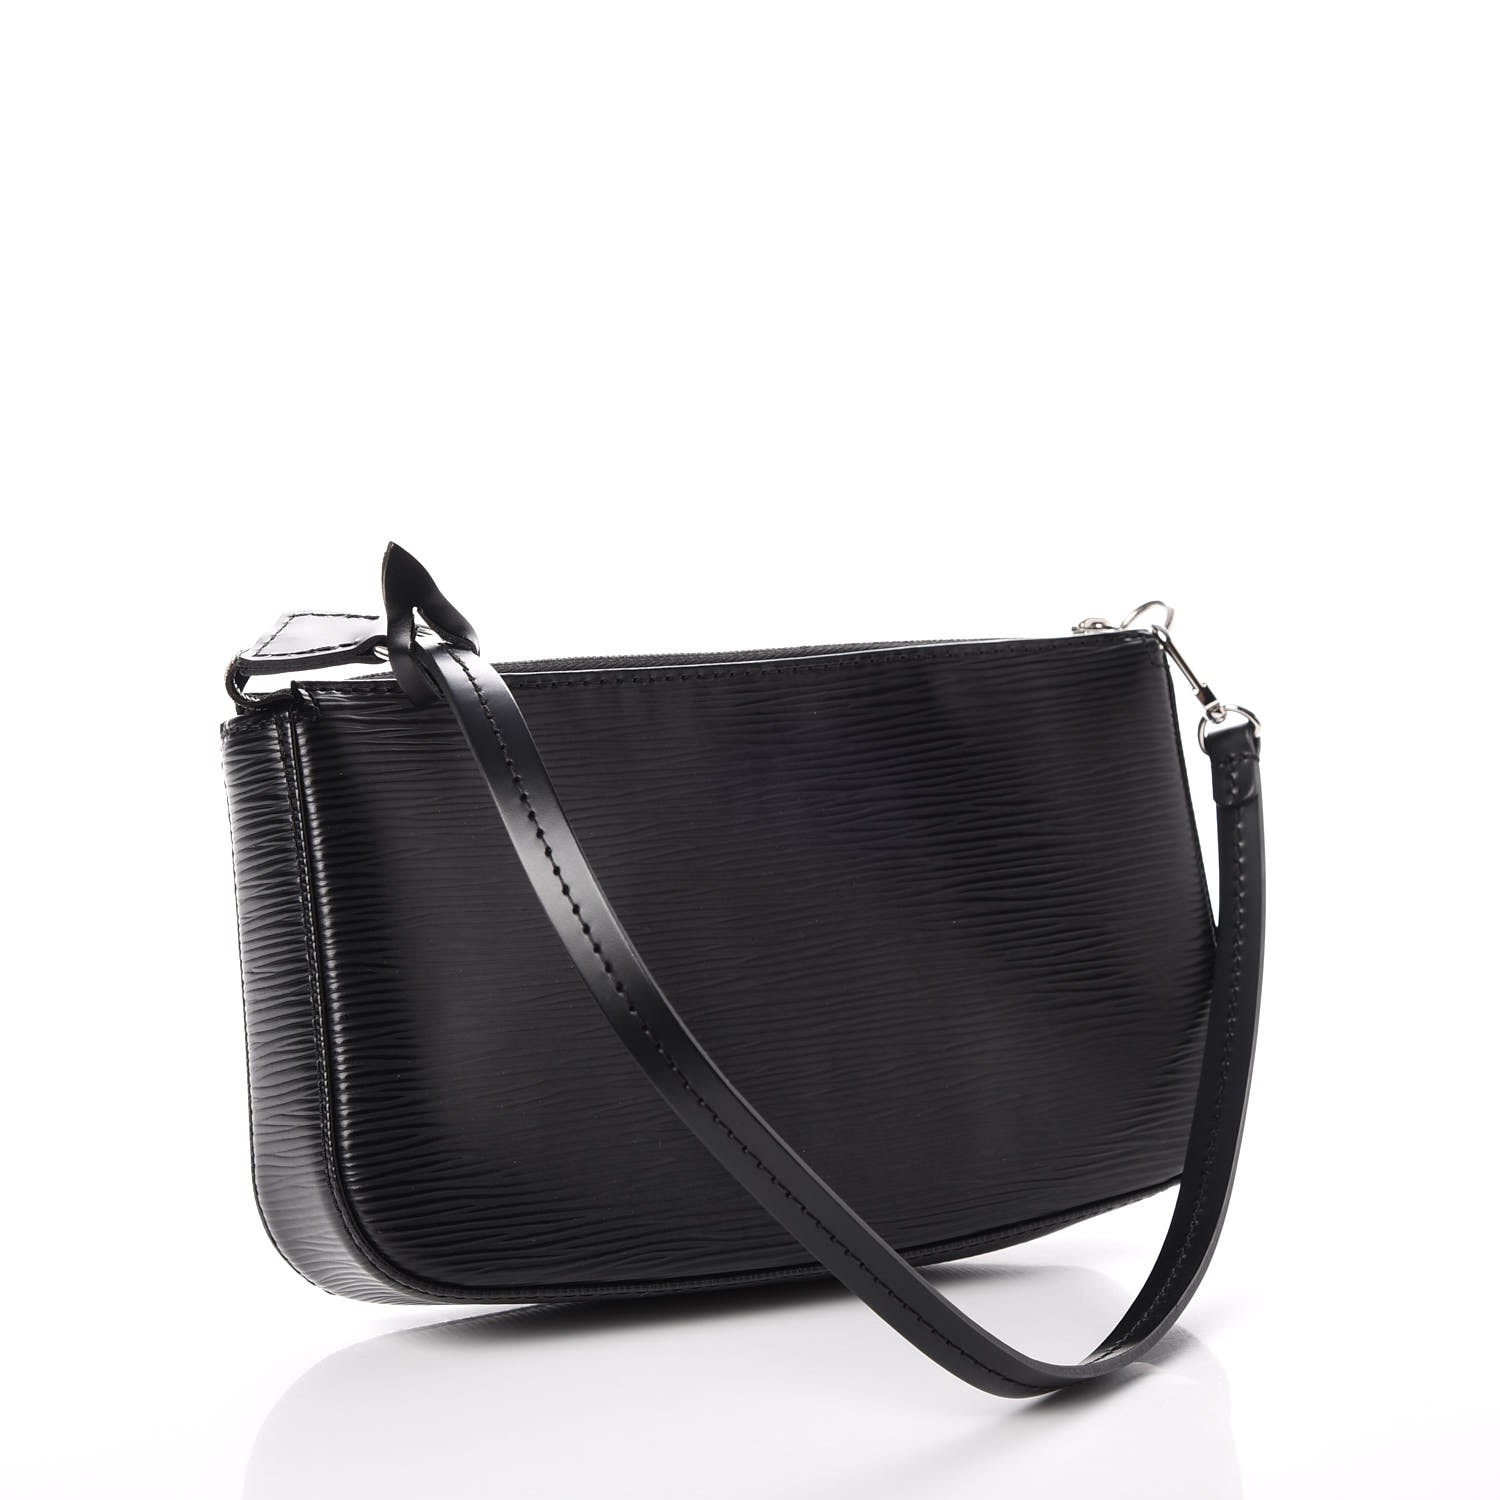 Louis Vuitton Pochette Accessories EPI 24 Yellow Leather Crossbody Bag